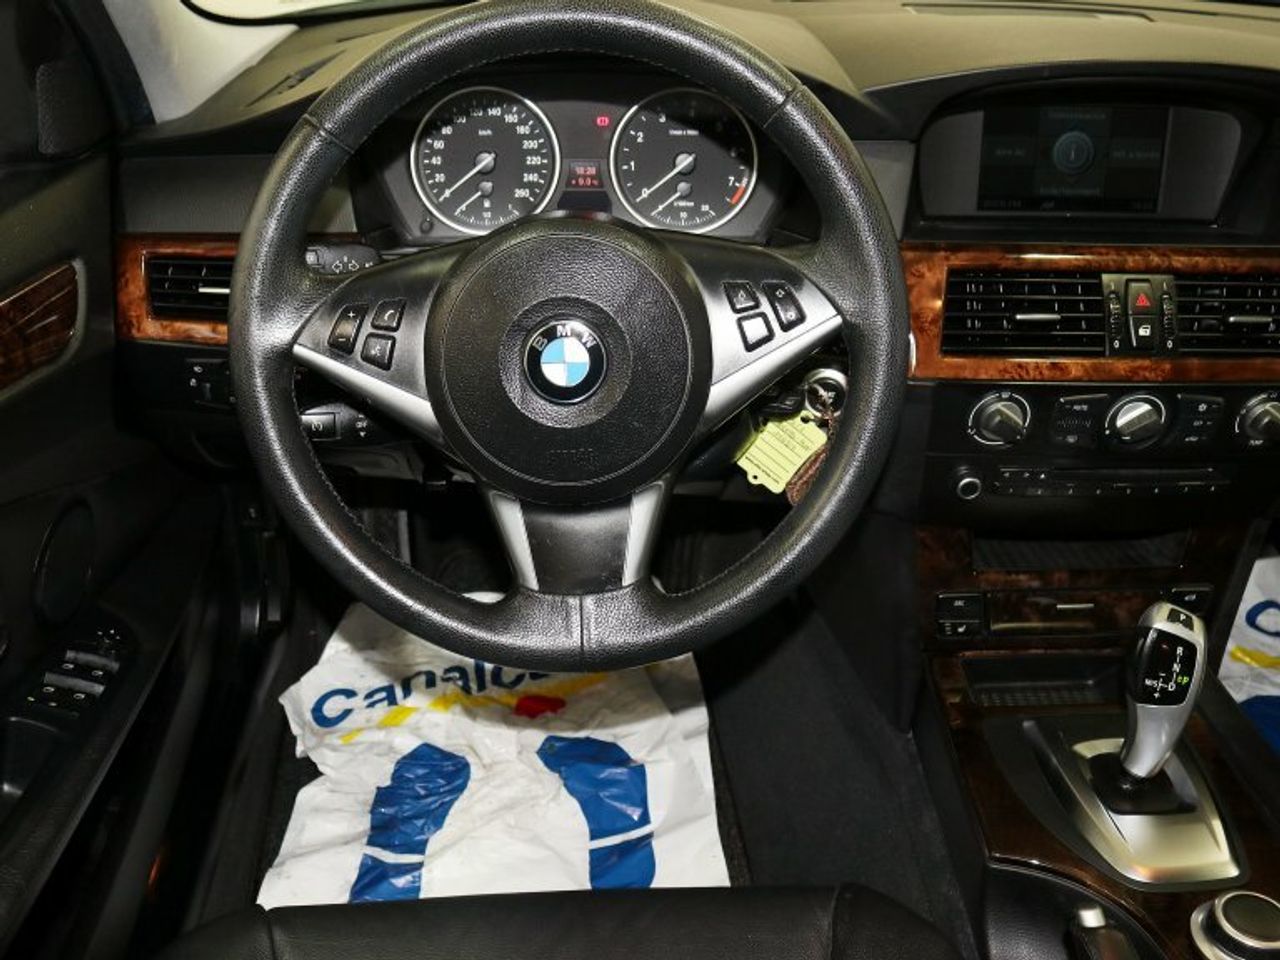 Foto BMW Serie 5 15